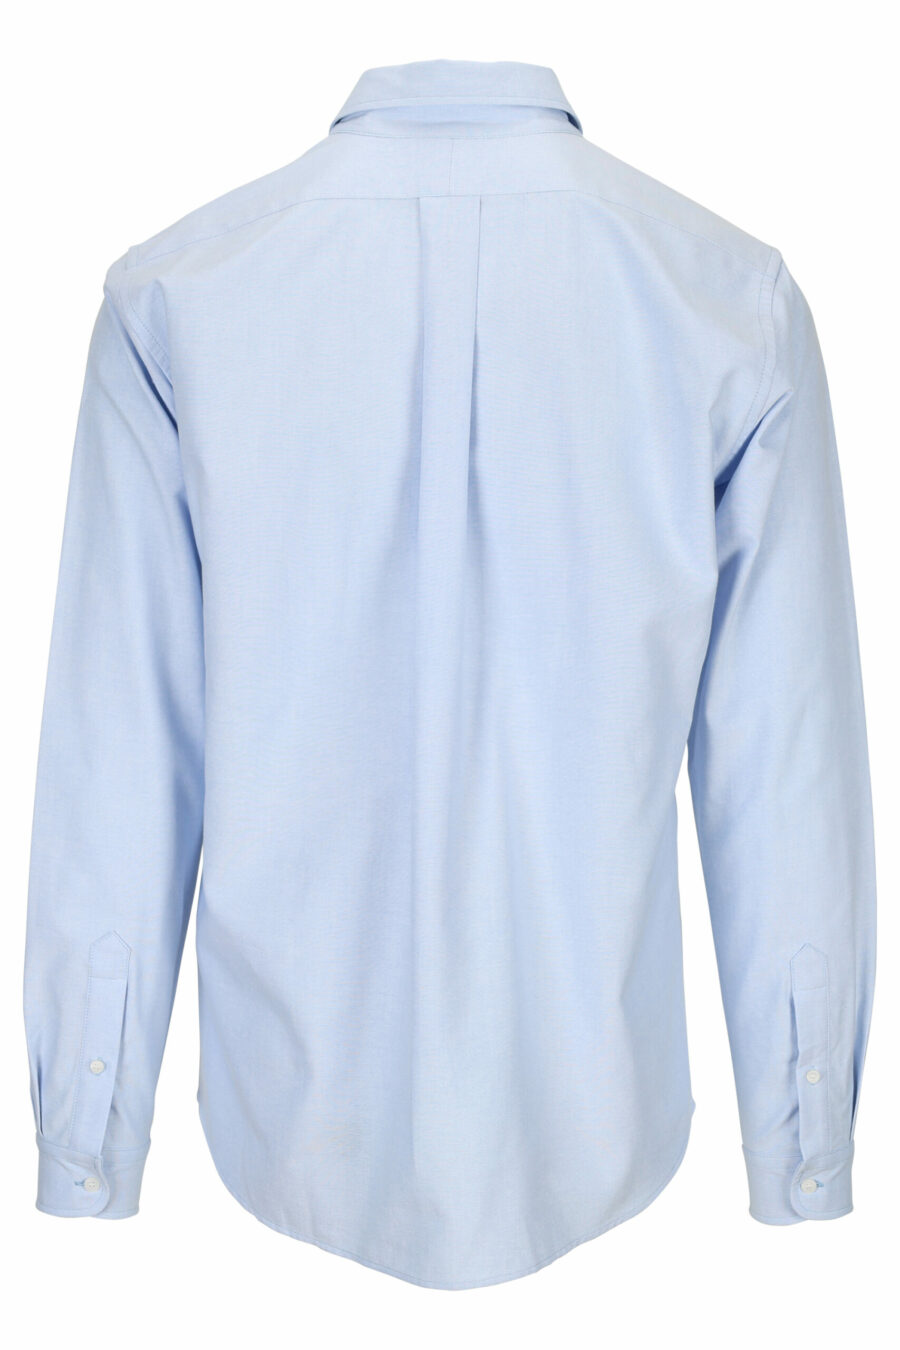 Light blue shirt with "boke flower" logo - 3612230432536 1 scaled